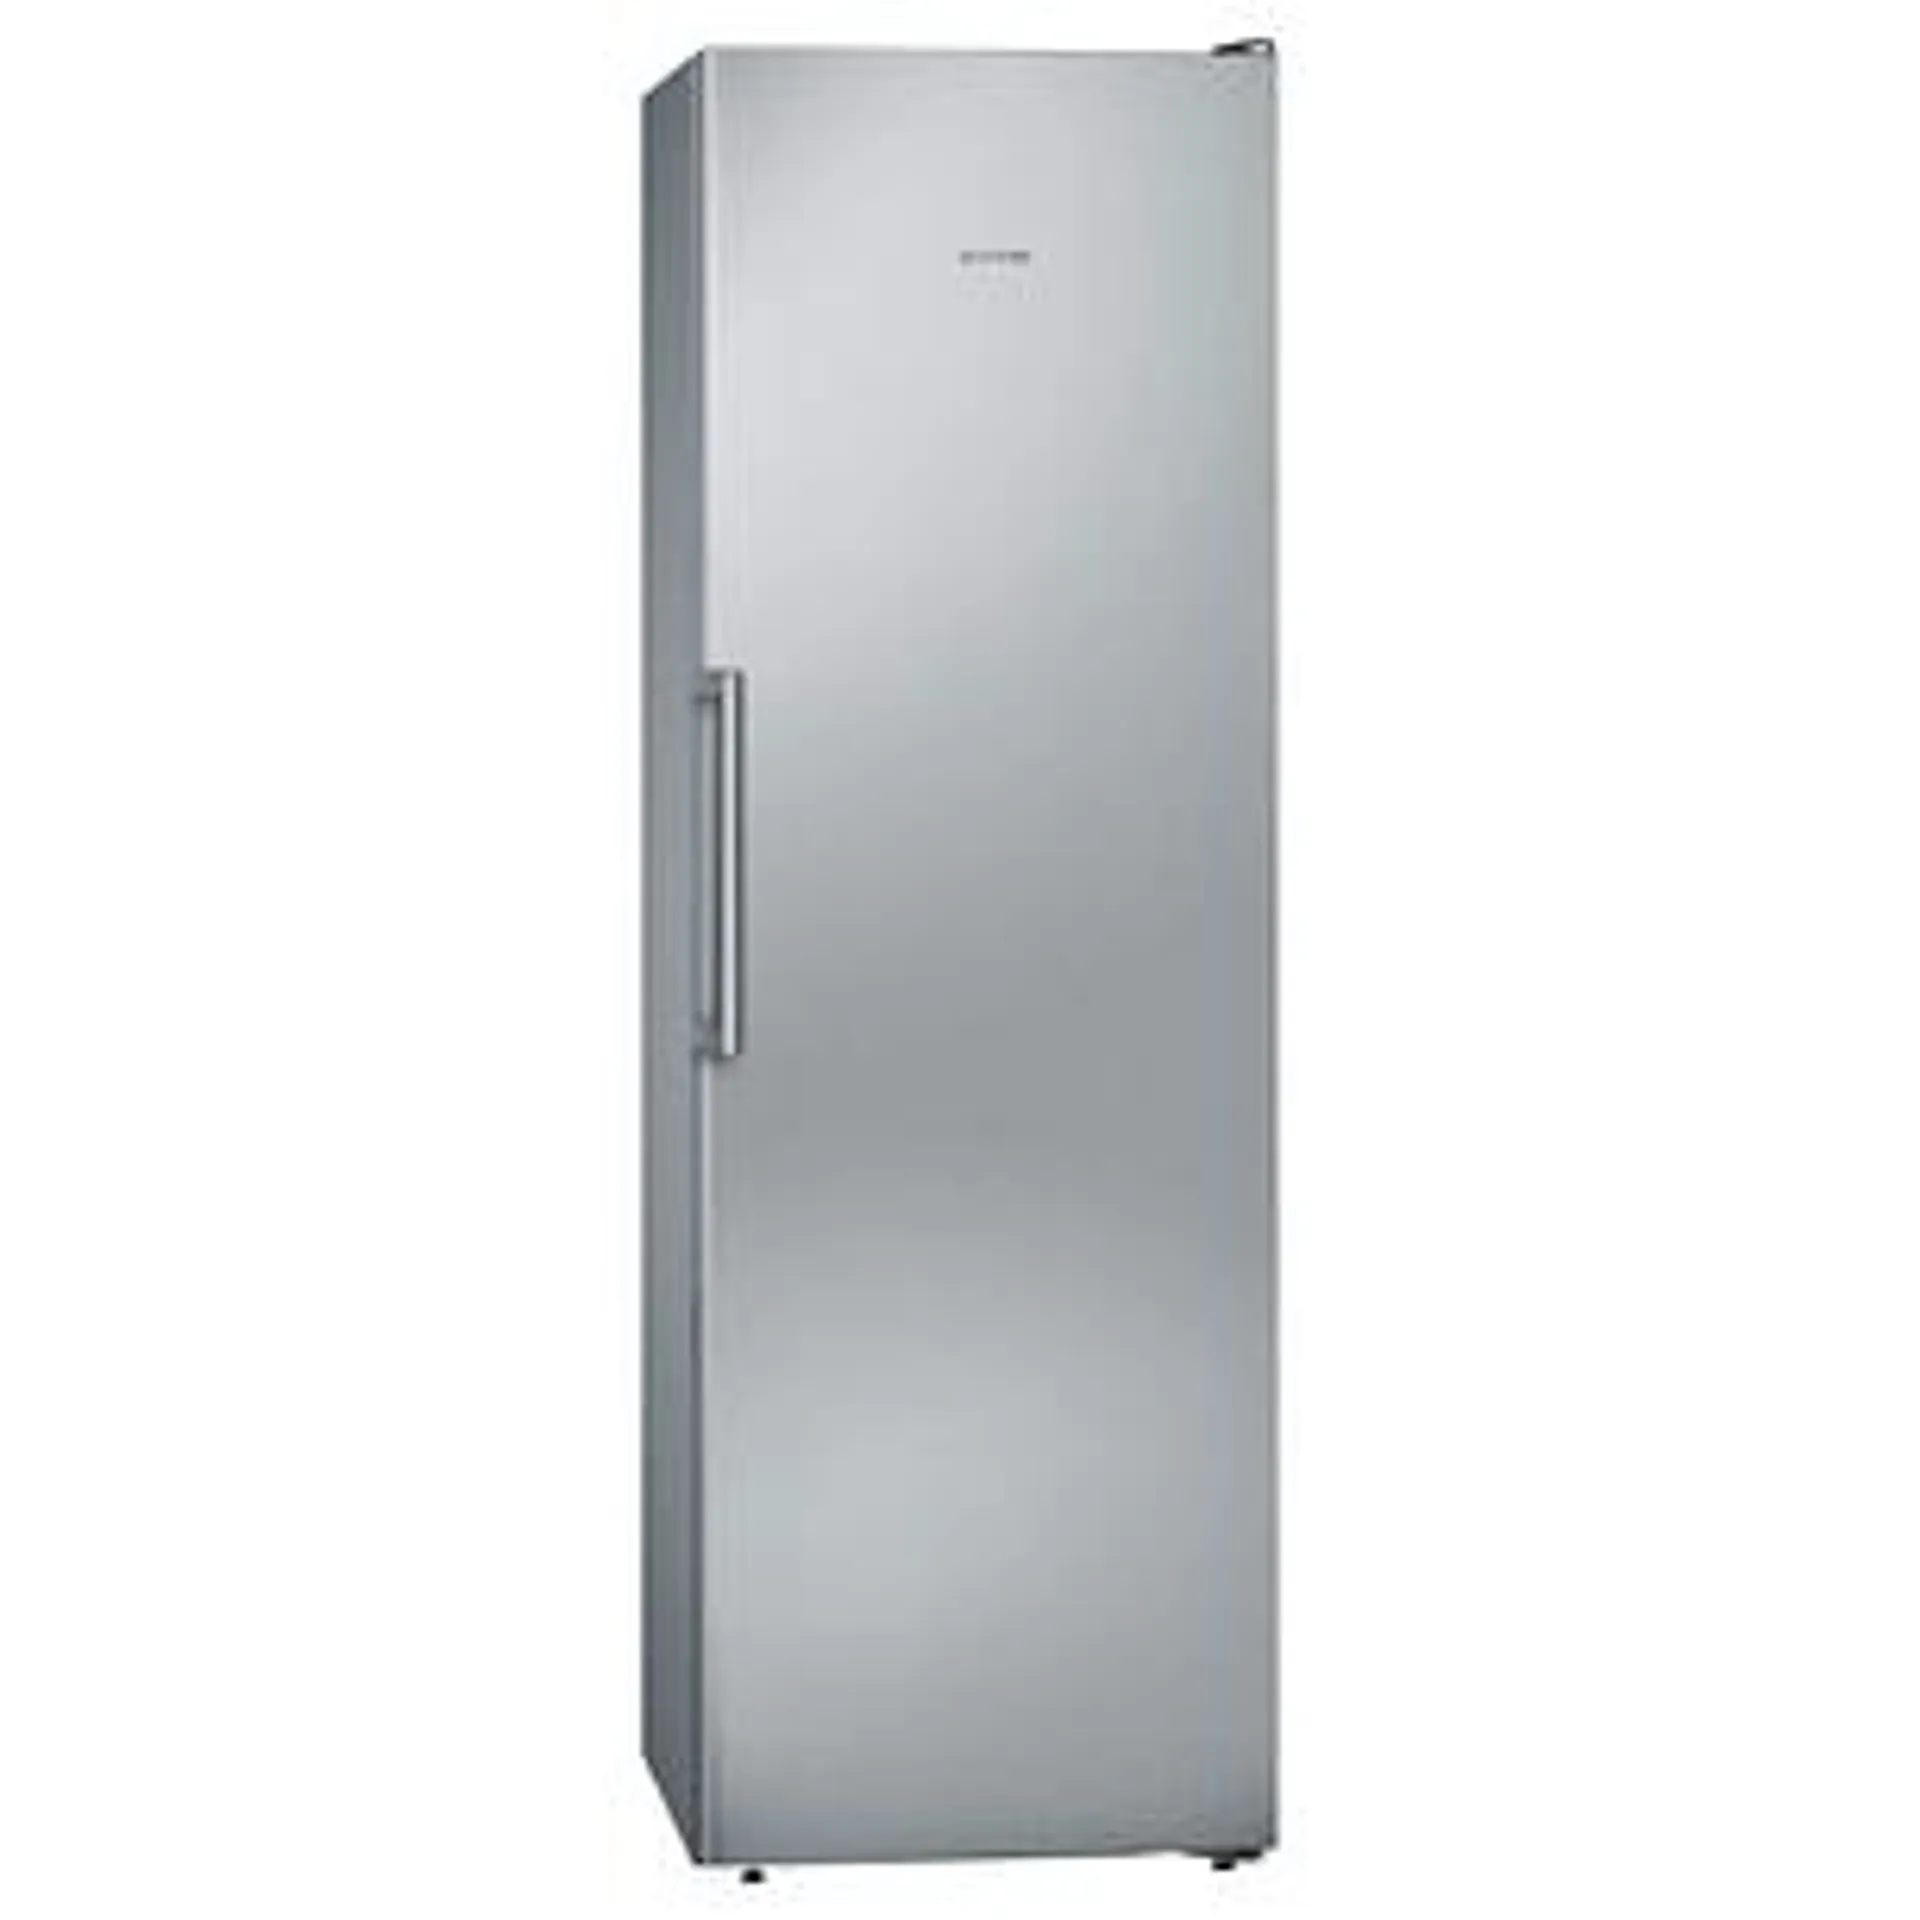 Siemens GS36NVIEV IQ-300 60cm Freestanding Frost Free Freezer – STAINLESS STEEL